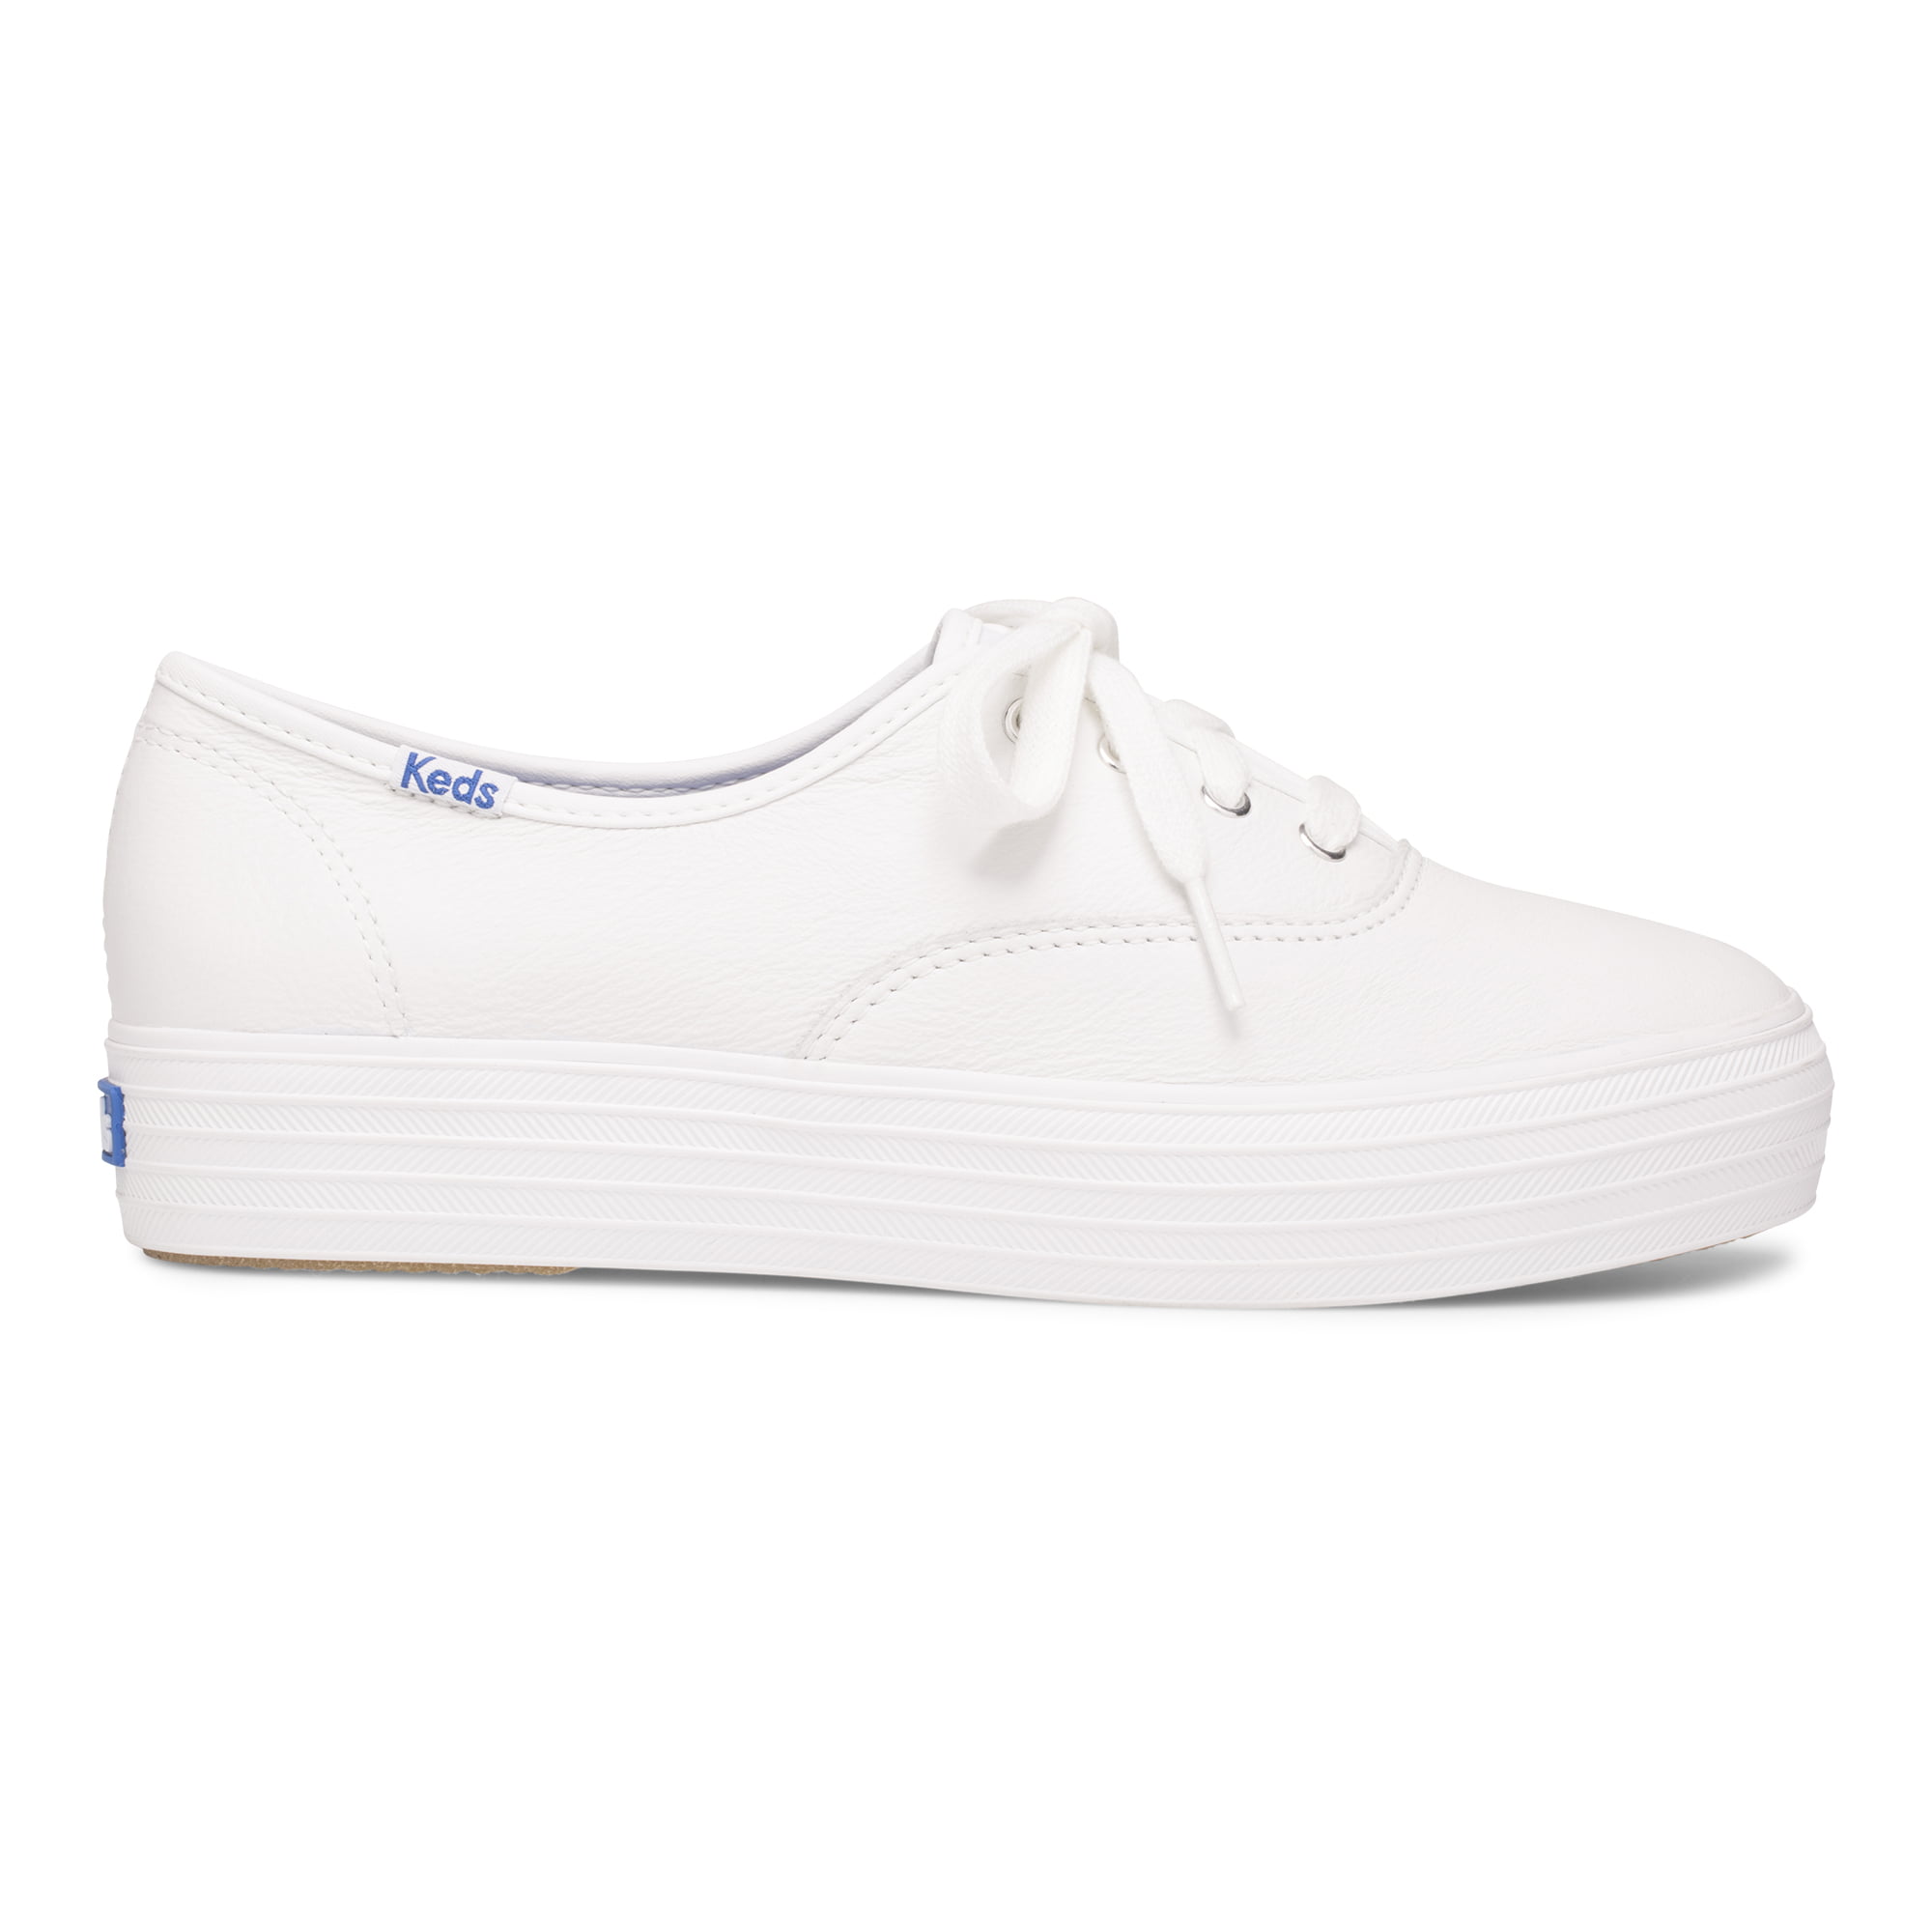 Keds Women's Triple Leather Sneakers in White, 11 US | Walmart Canada